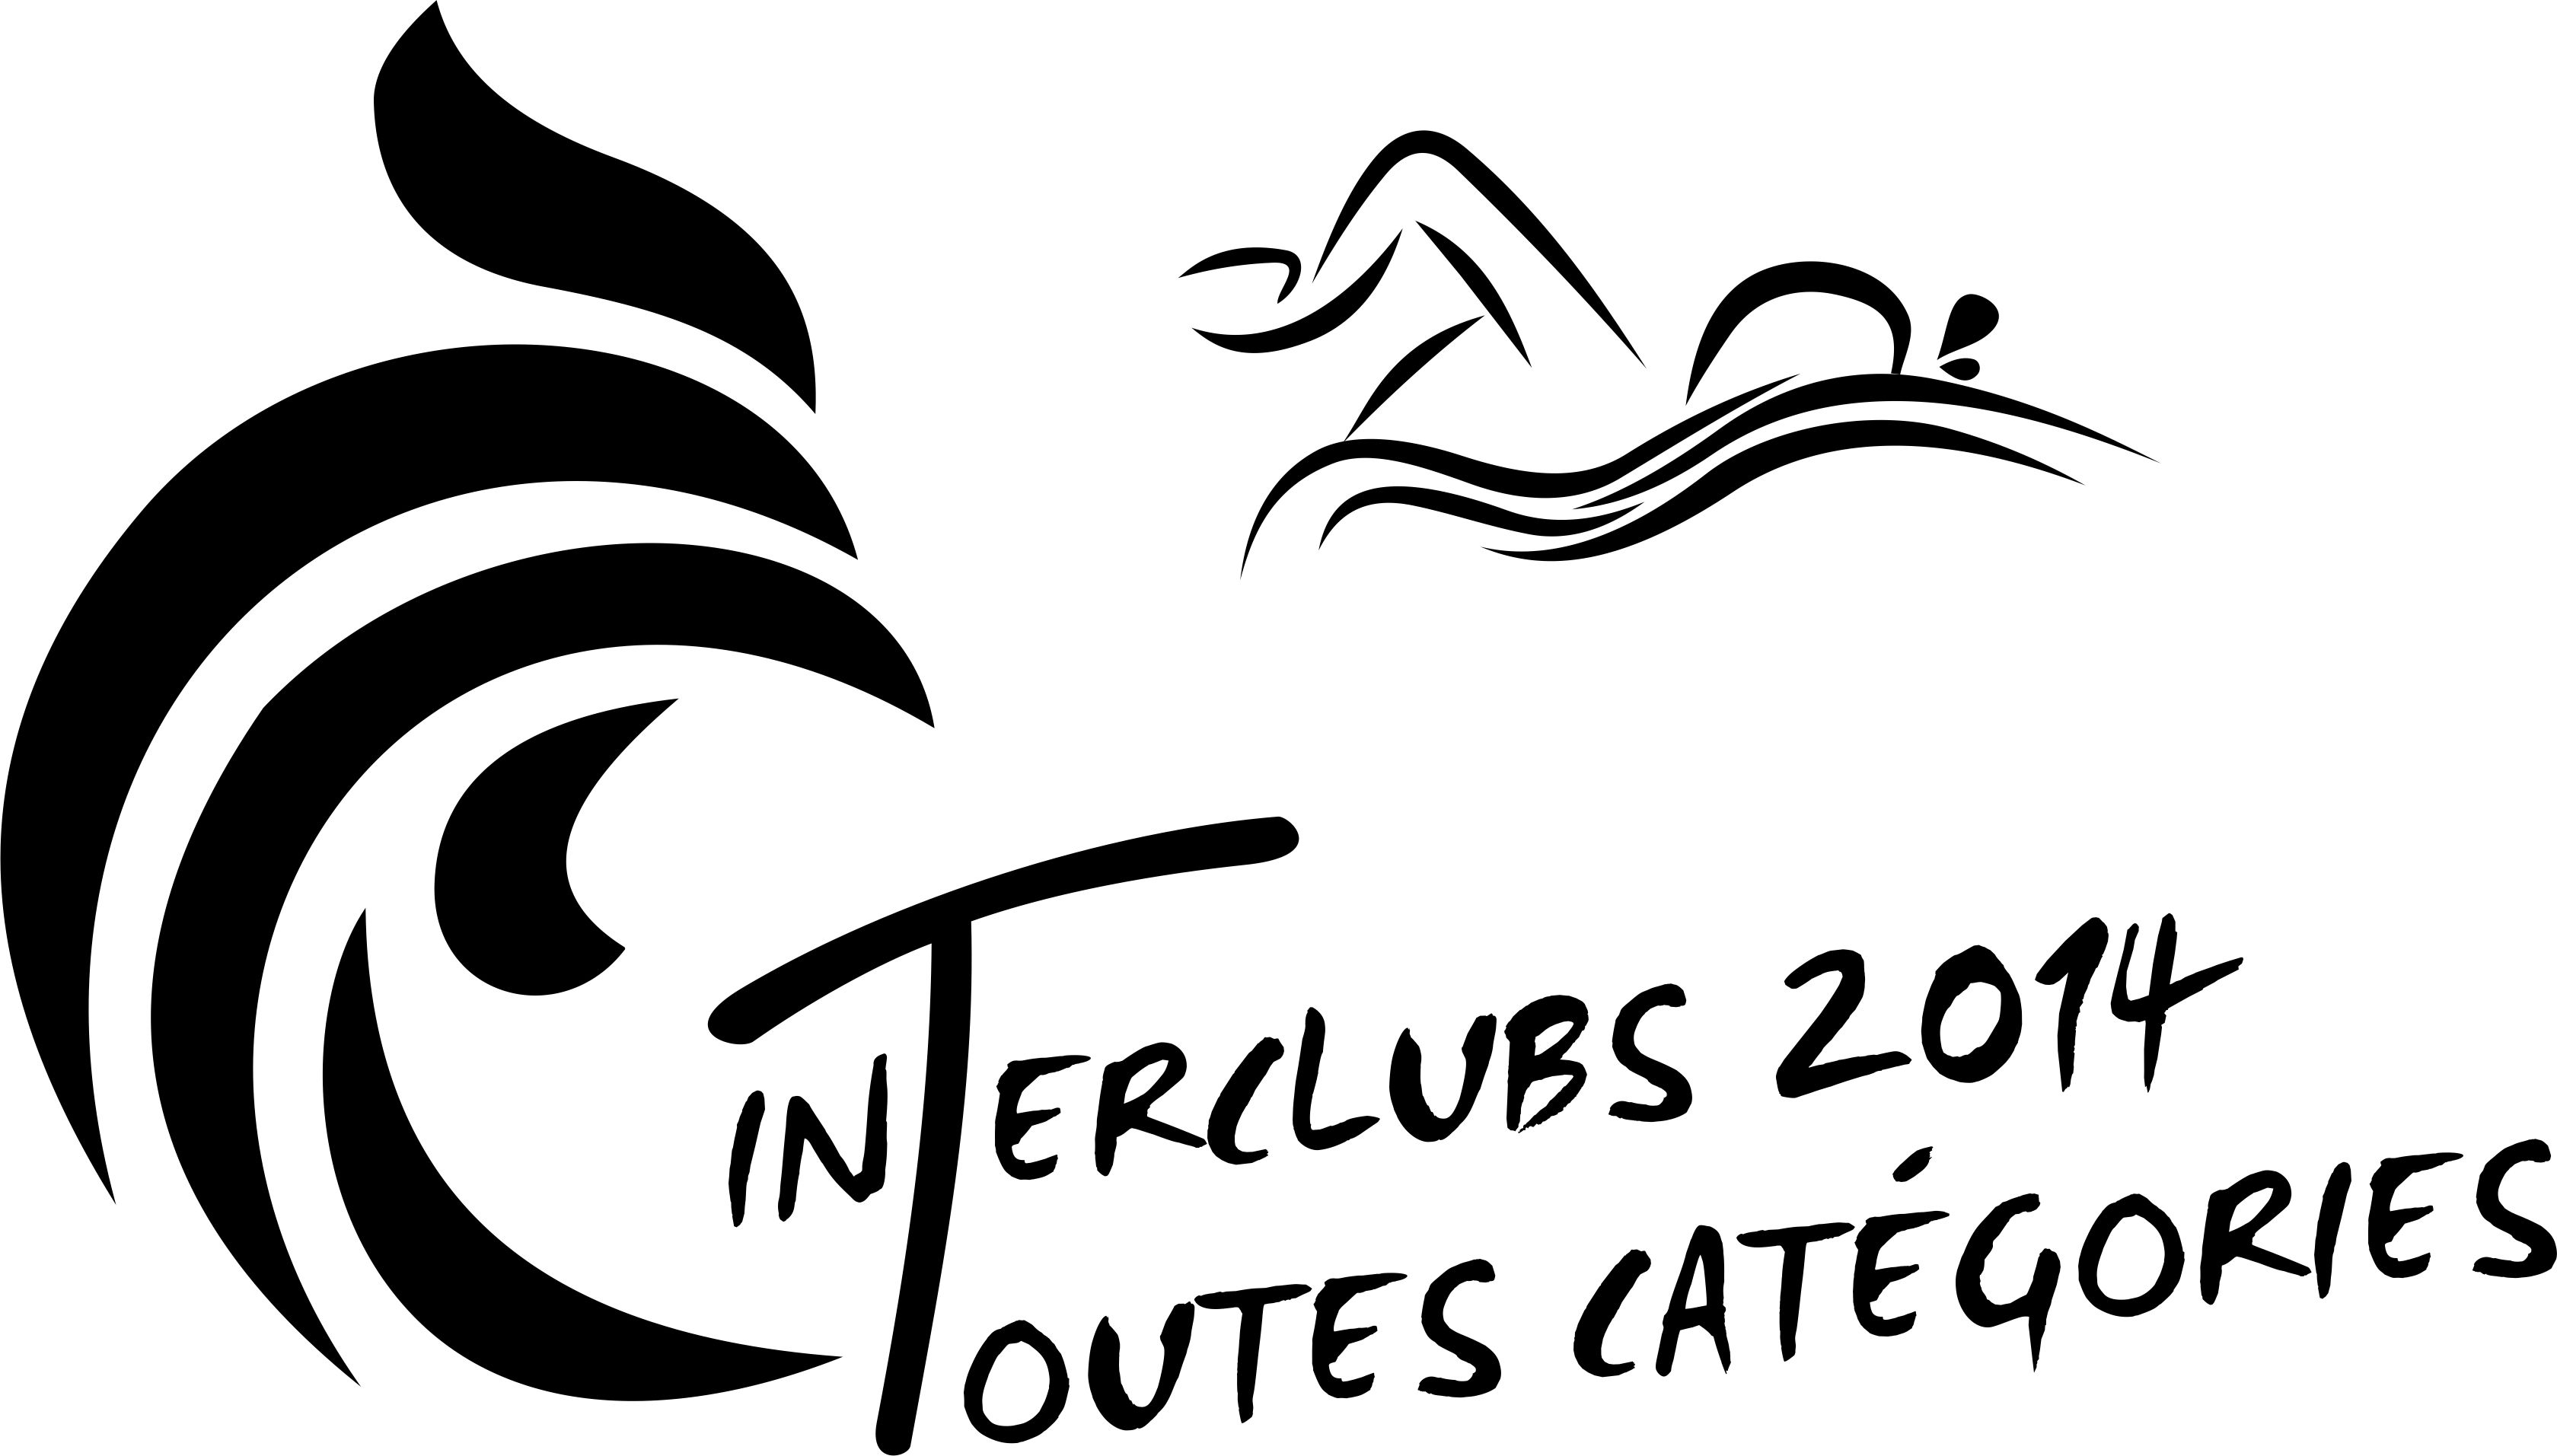 2014 logo interclubs